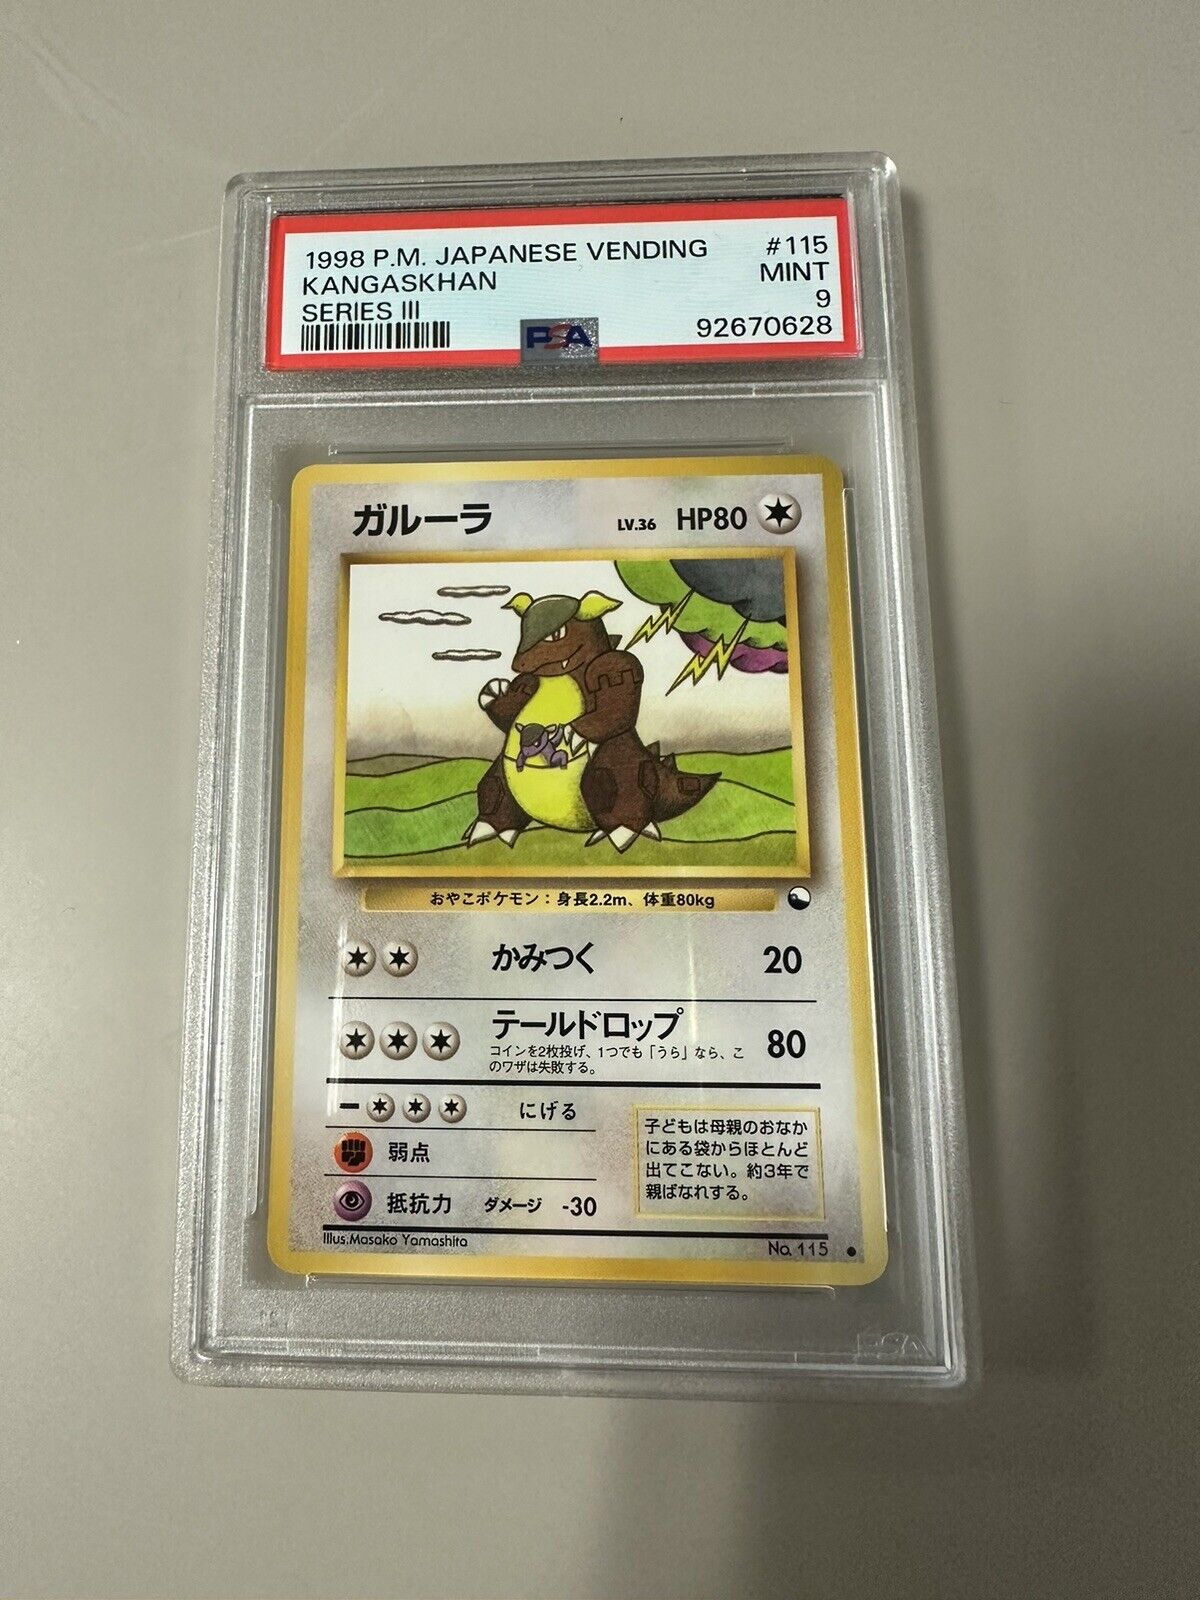 PSA 9 KANGASKHAN Vending Series 3 Japanese #115 Pokemon 1998 MINT